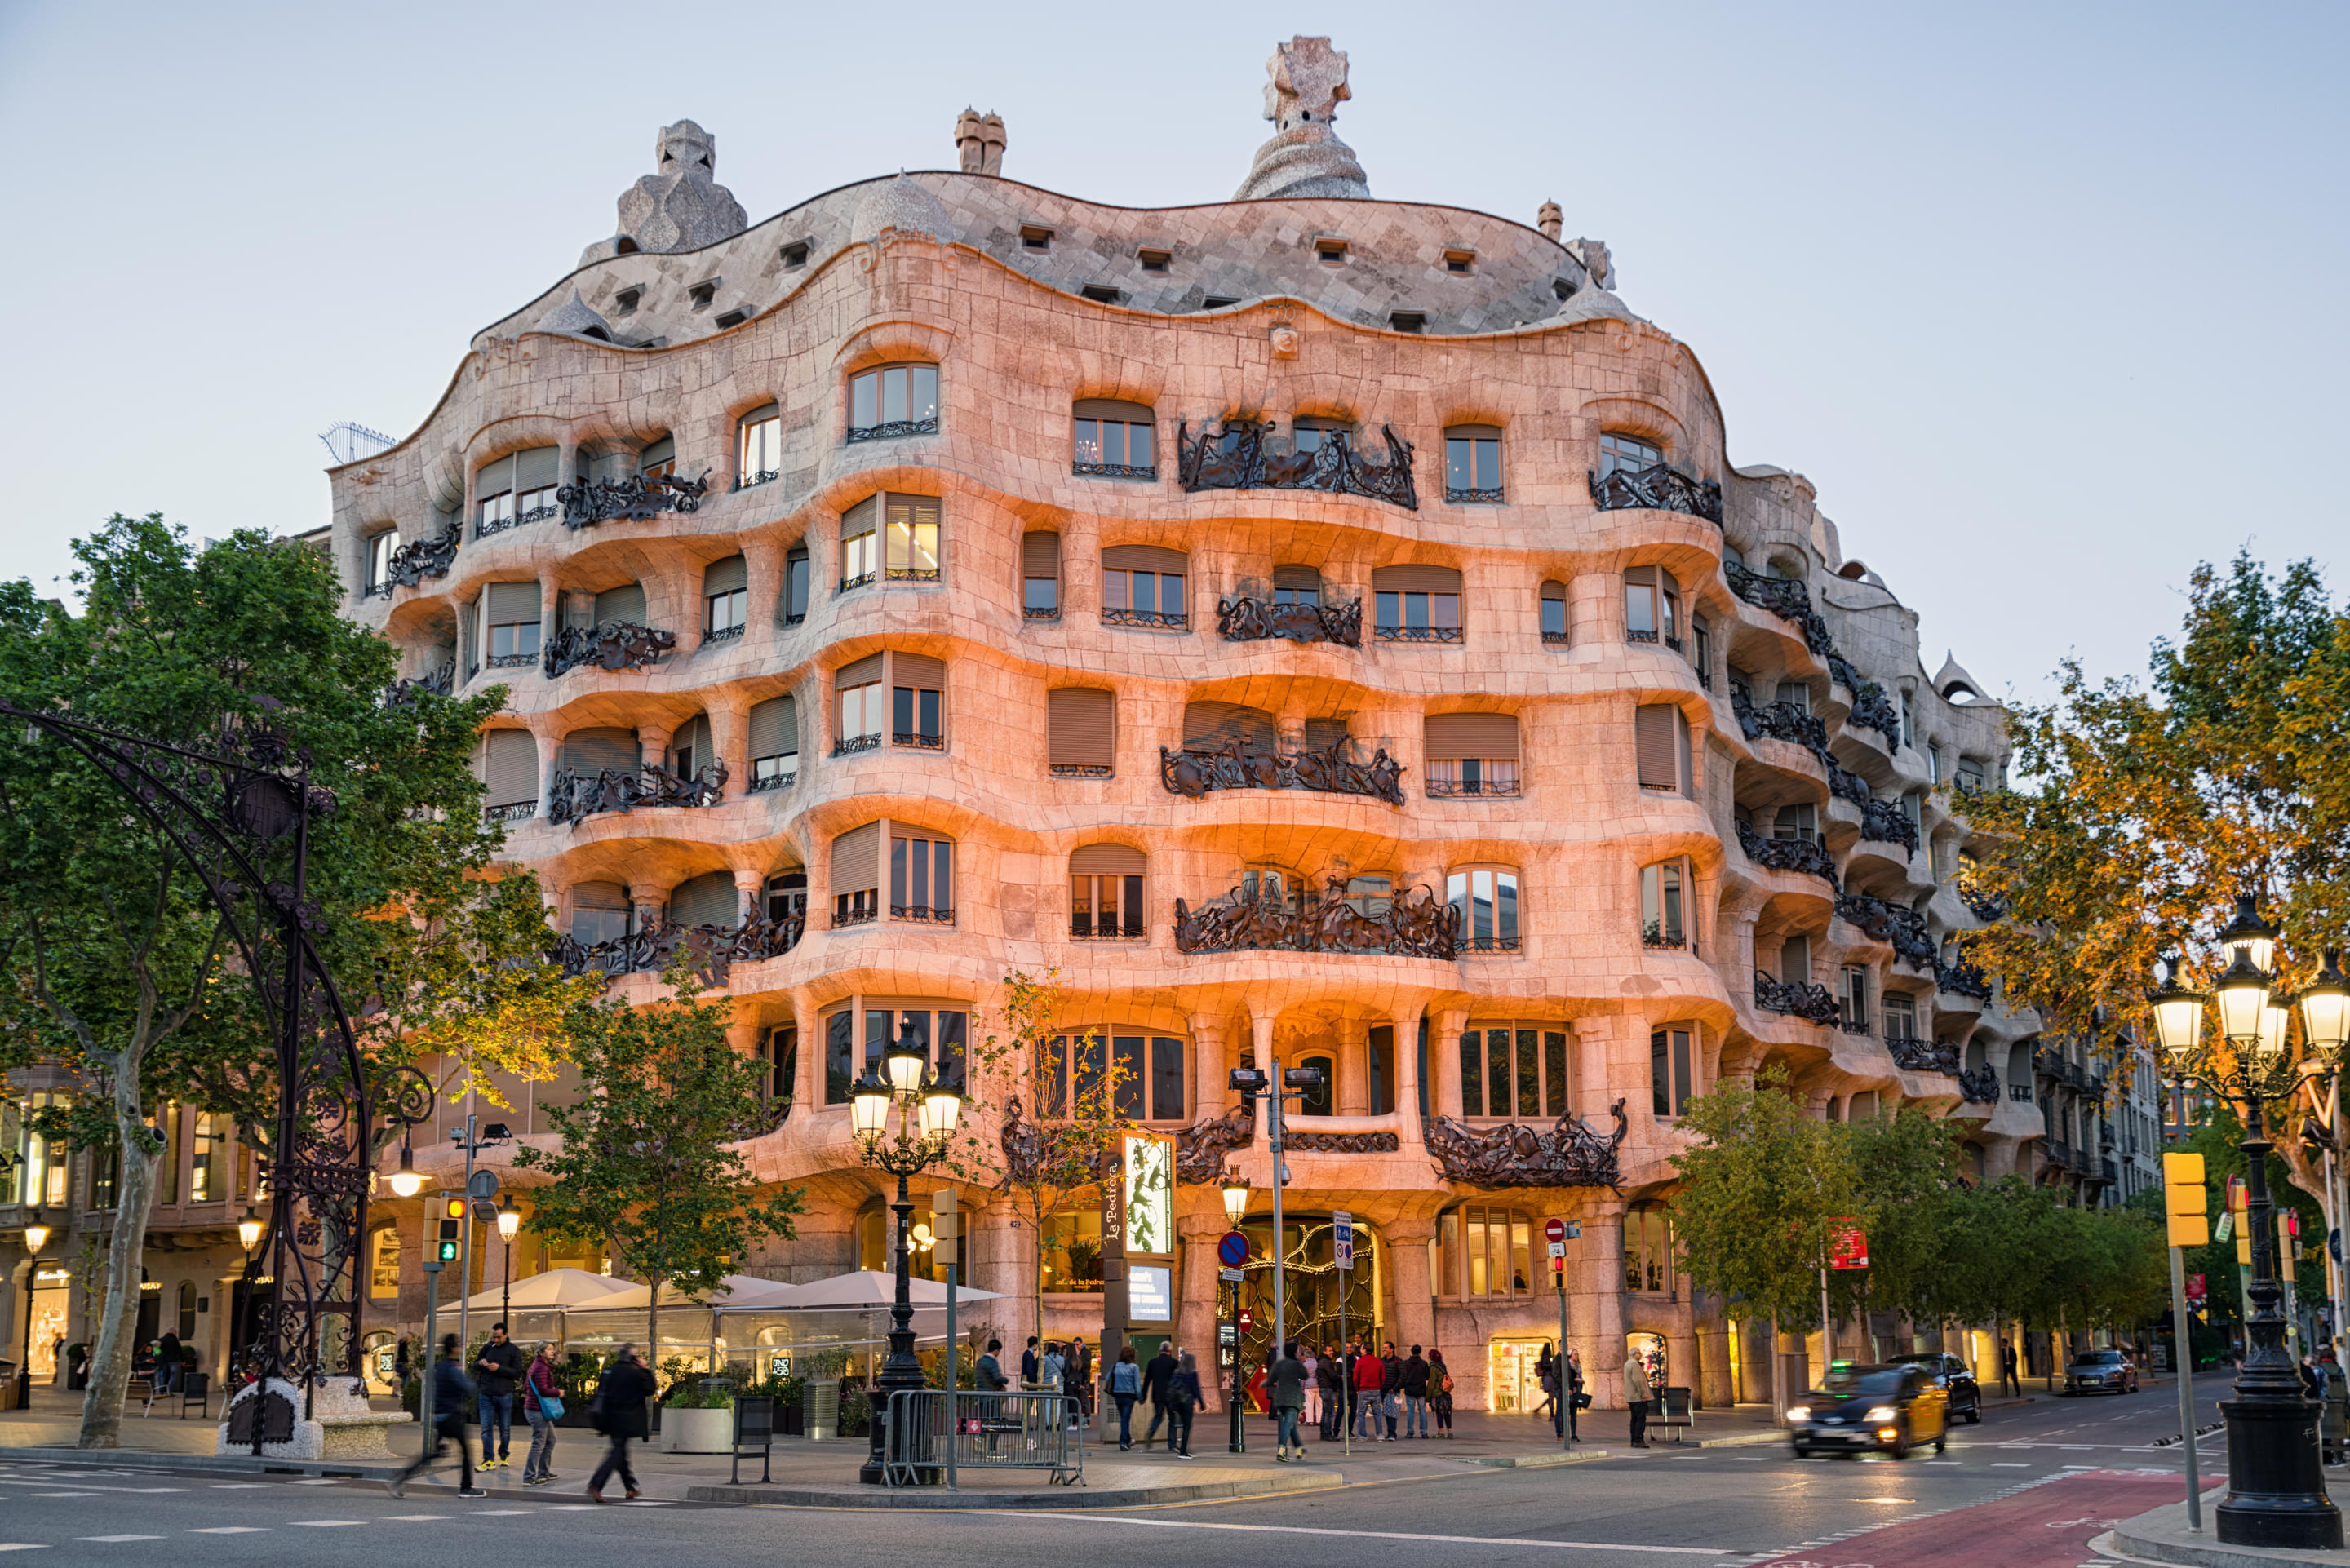 Casa Mila Barcelona Overview